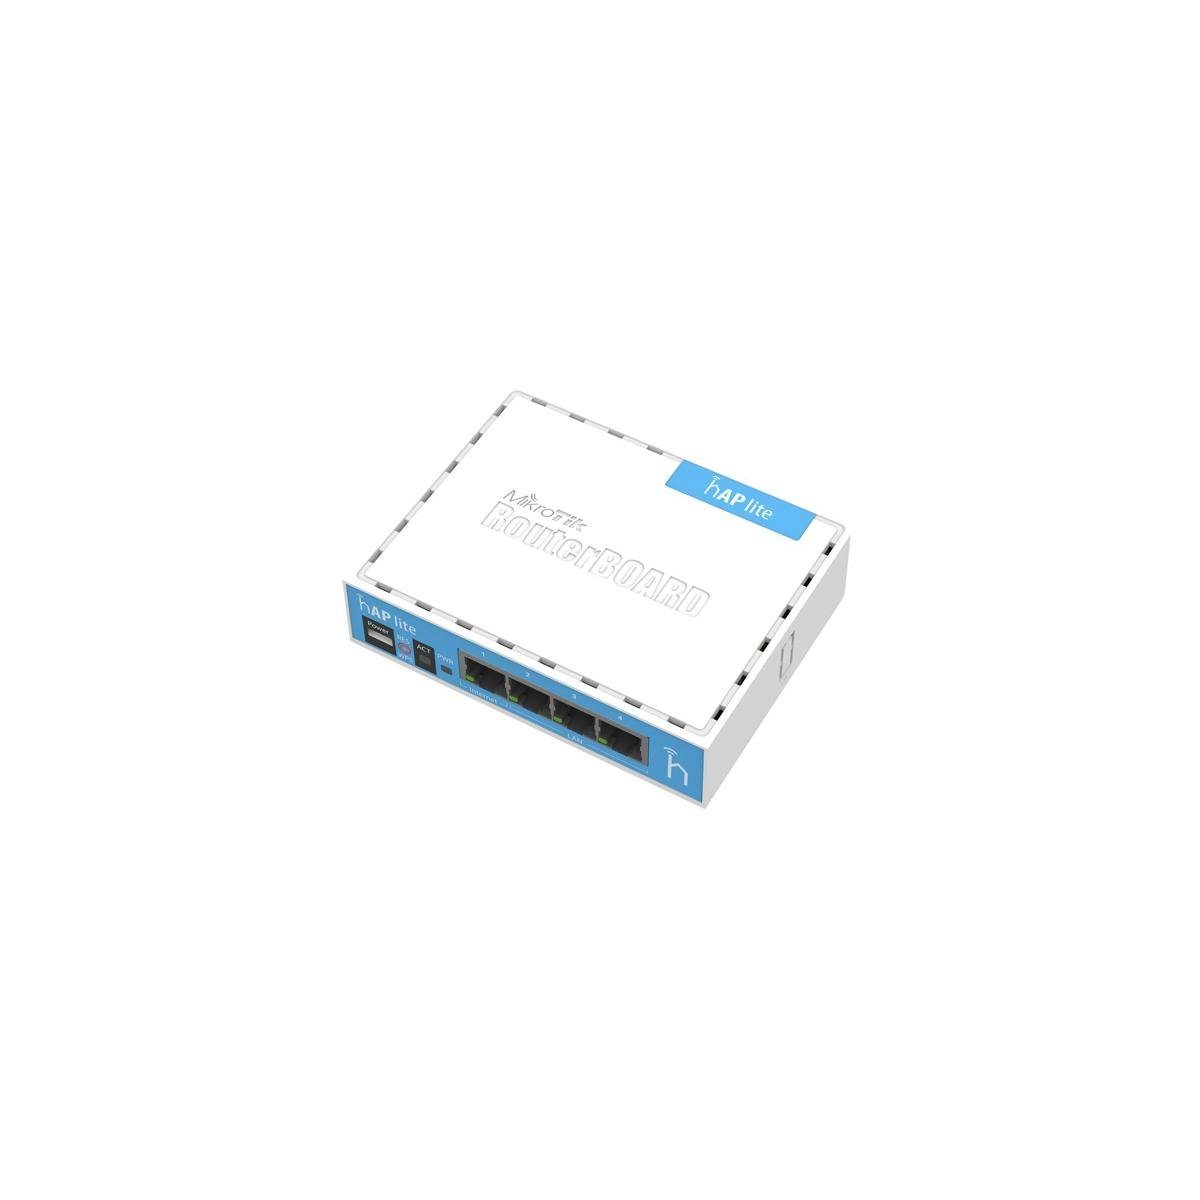 MikroTik RB941-2ND - RouterBoard - hAP Lite mit 650 MHz, 32 MB RAM Netzwerk-Switch